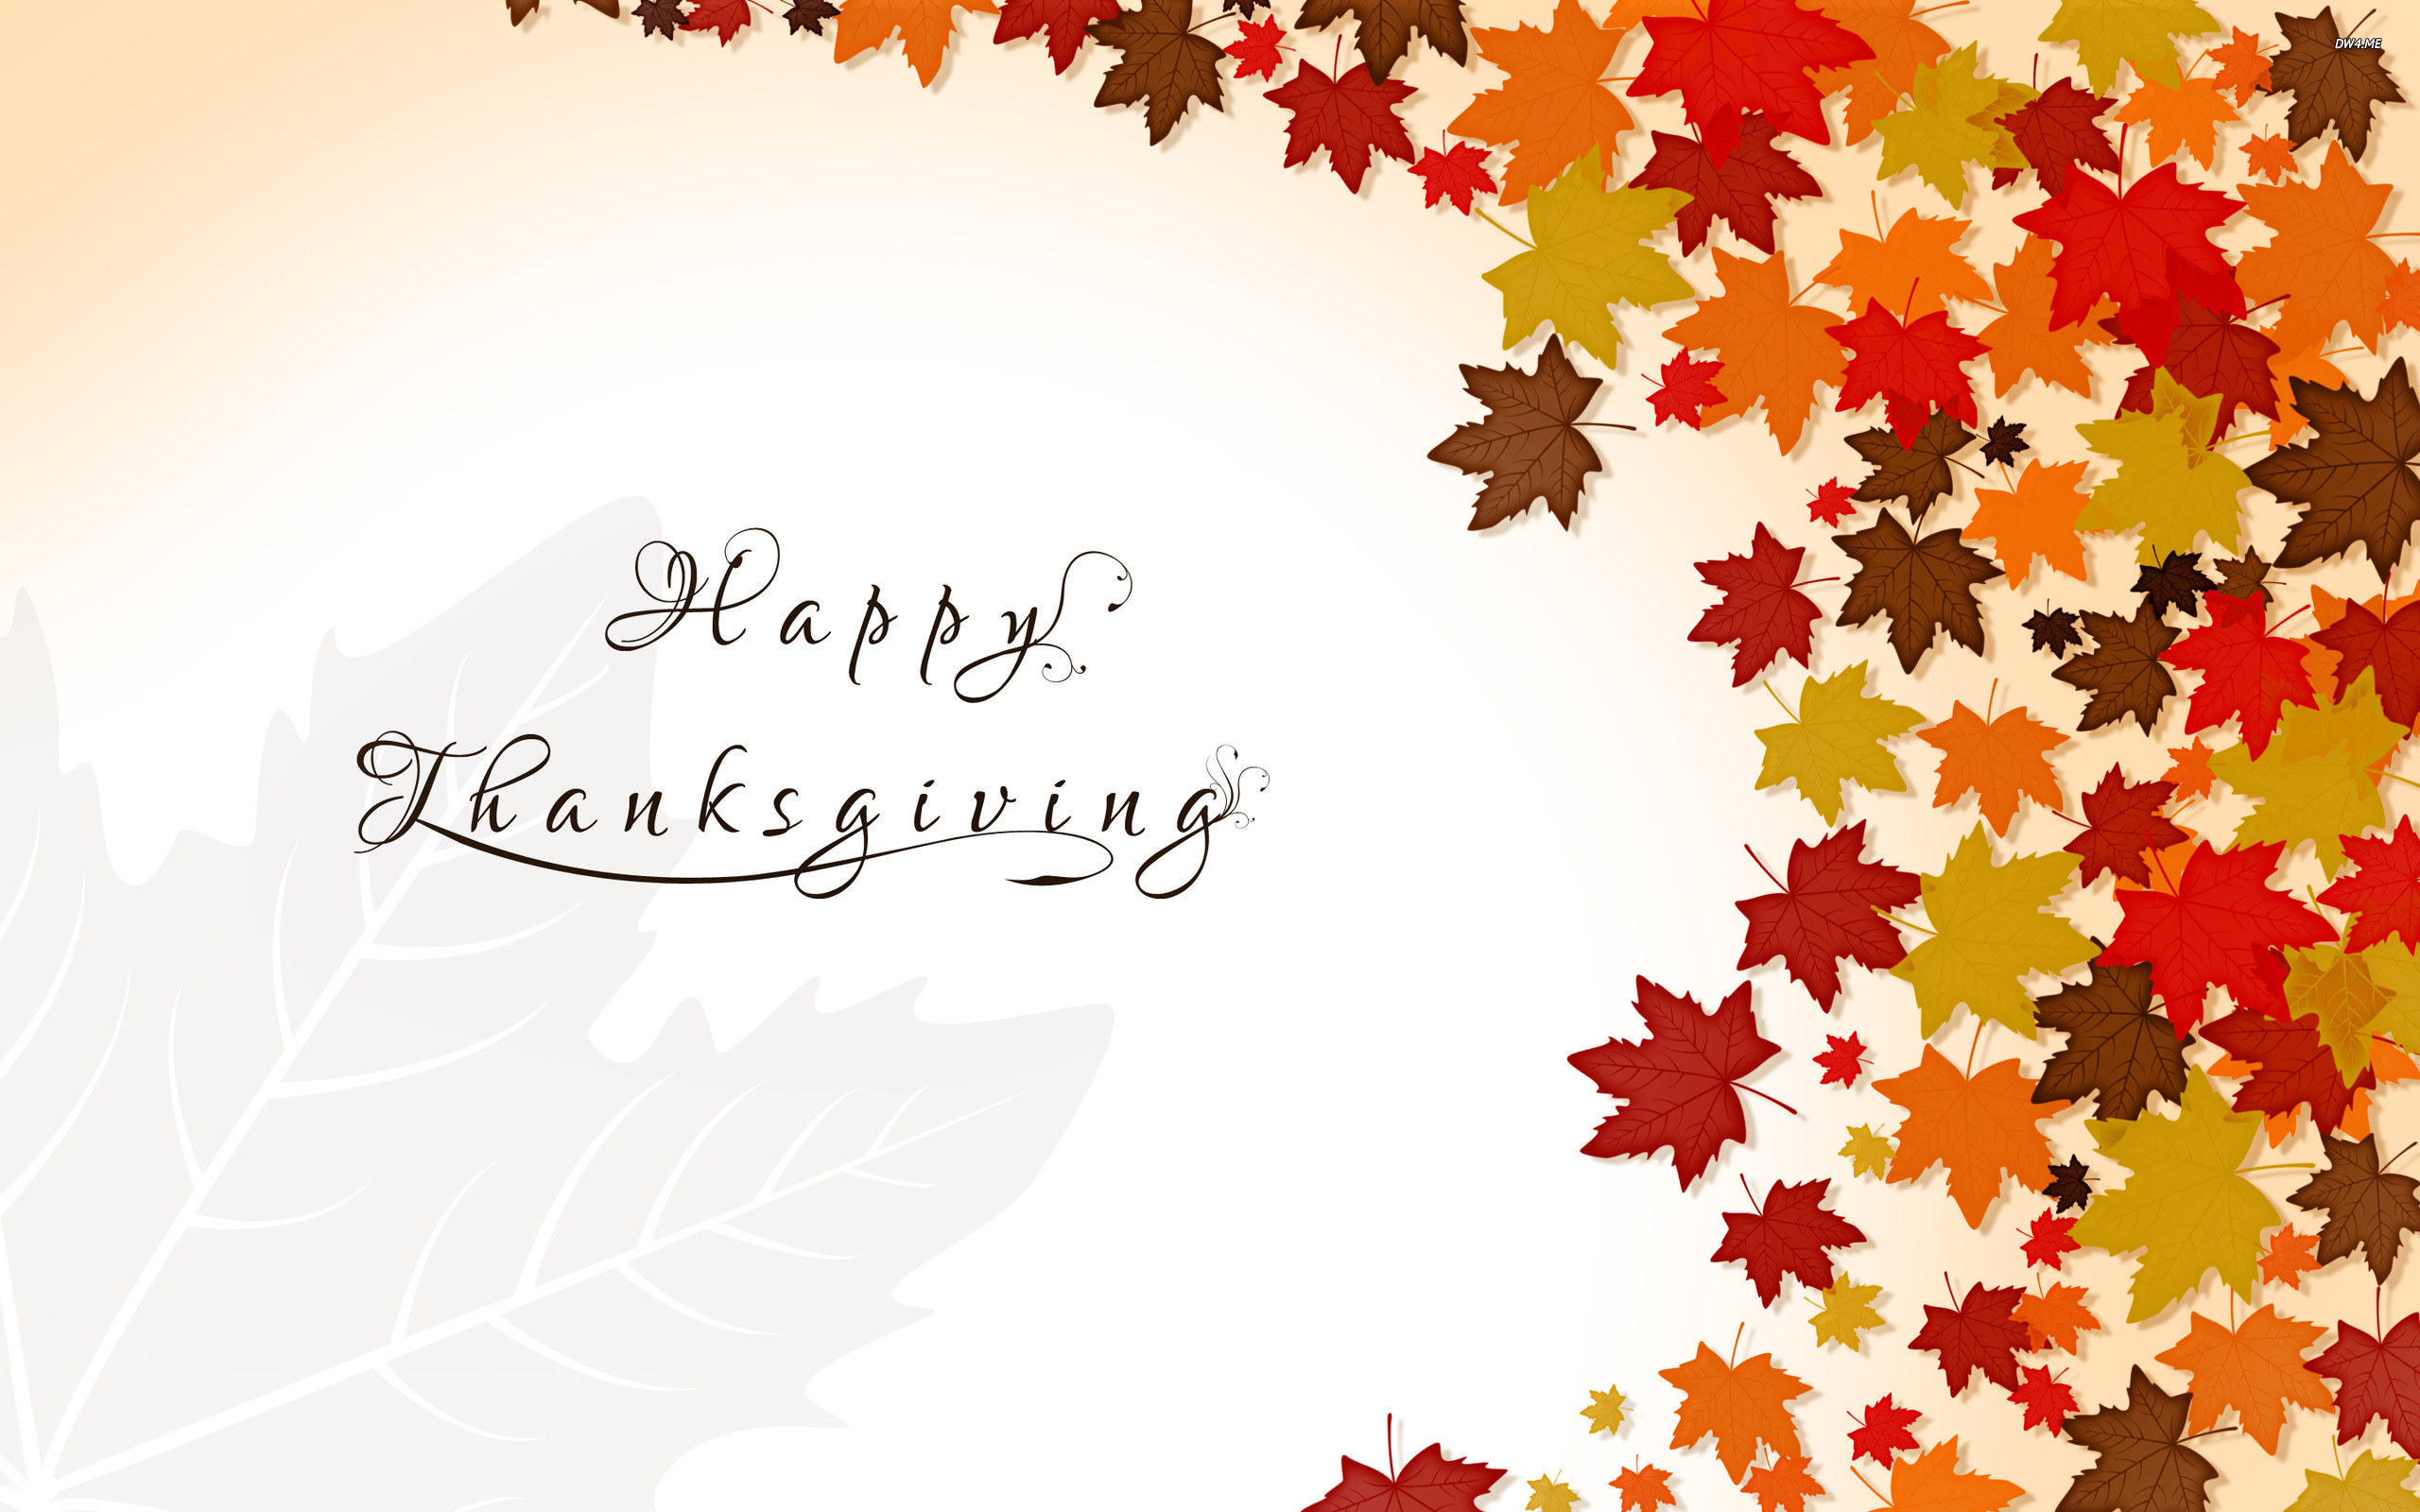 Happy Thanksgiving wallpaper hd